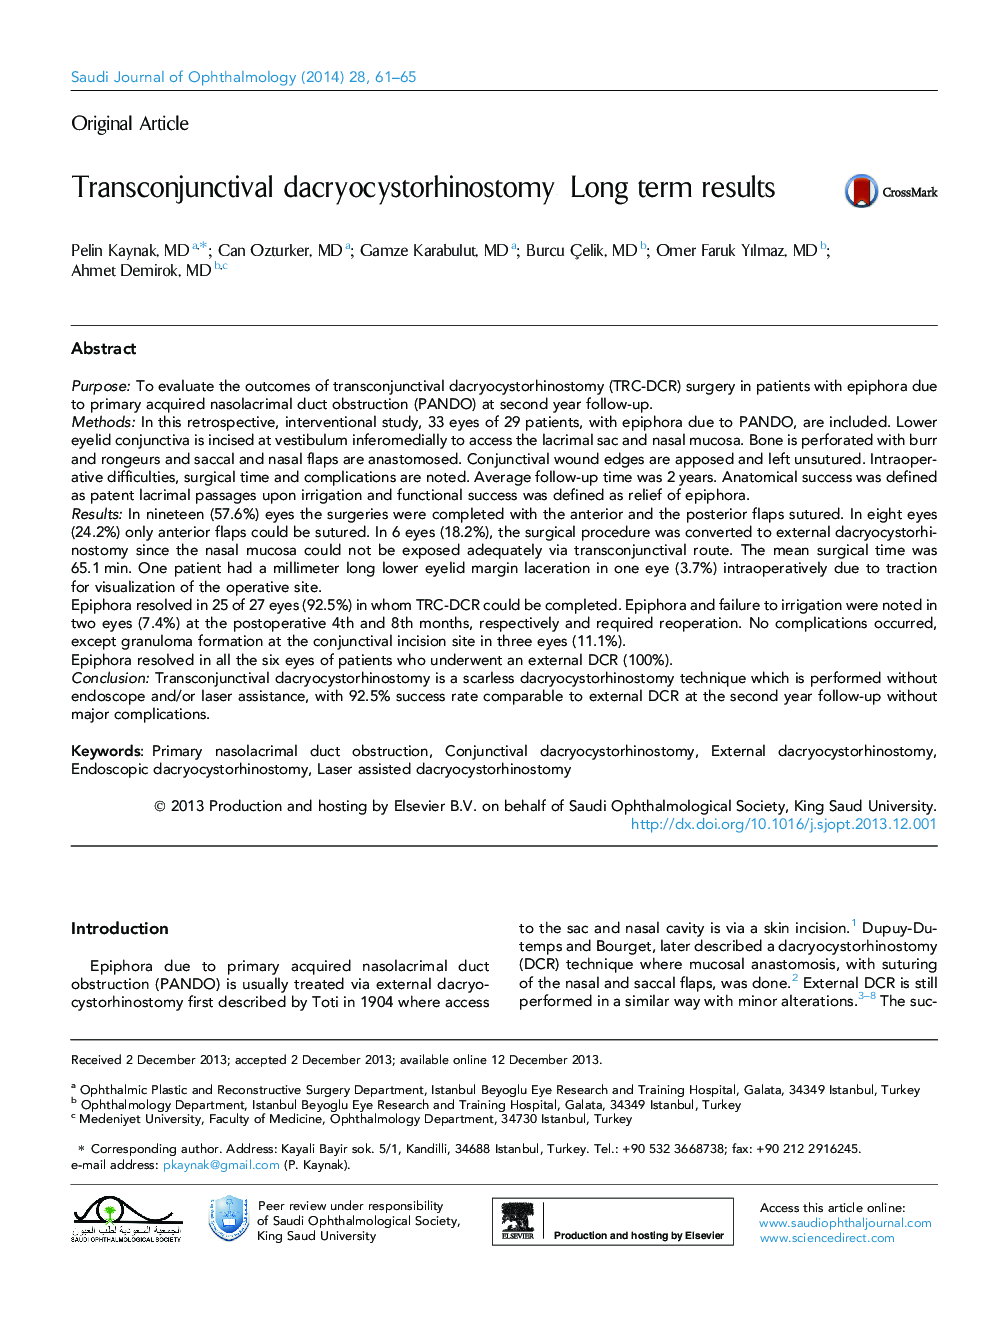 (Transaconjunctival dacryocystorhinostomy): نتایج بلند مدت